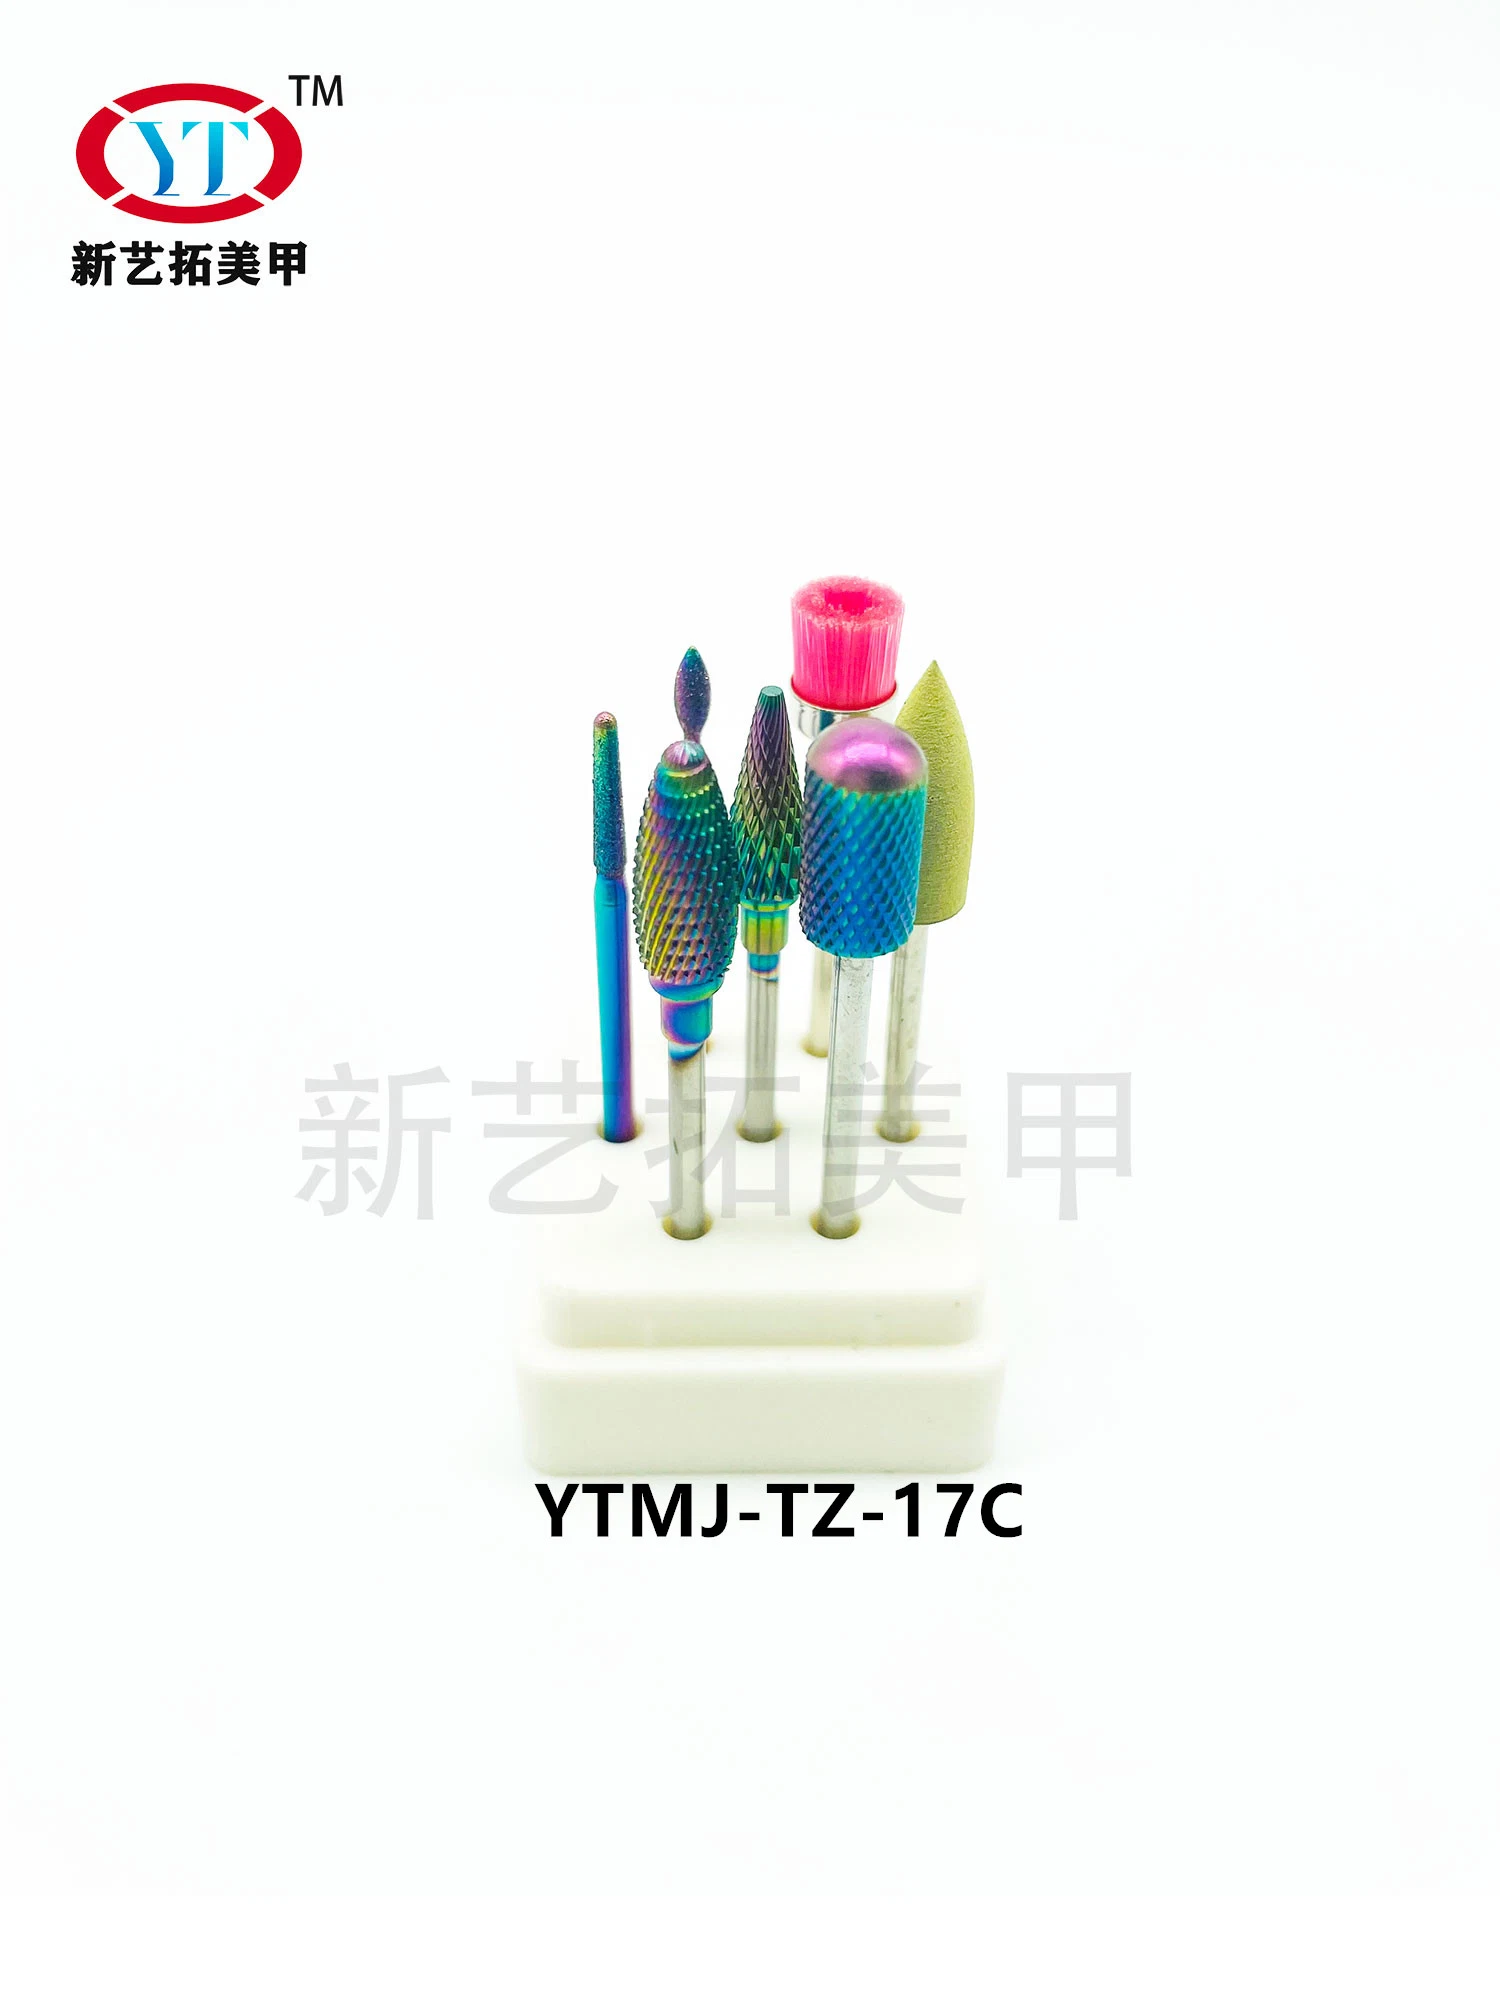 Nail Drill Bits Set for Electric Nail Art Drill Manicure Ytmj-Tz-17c